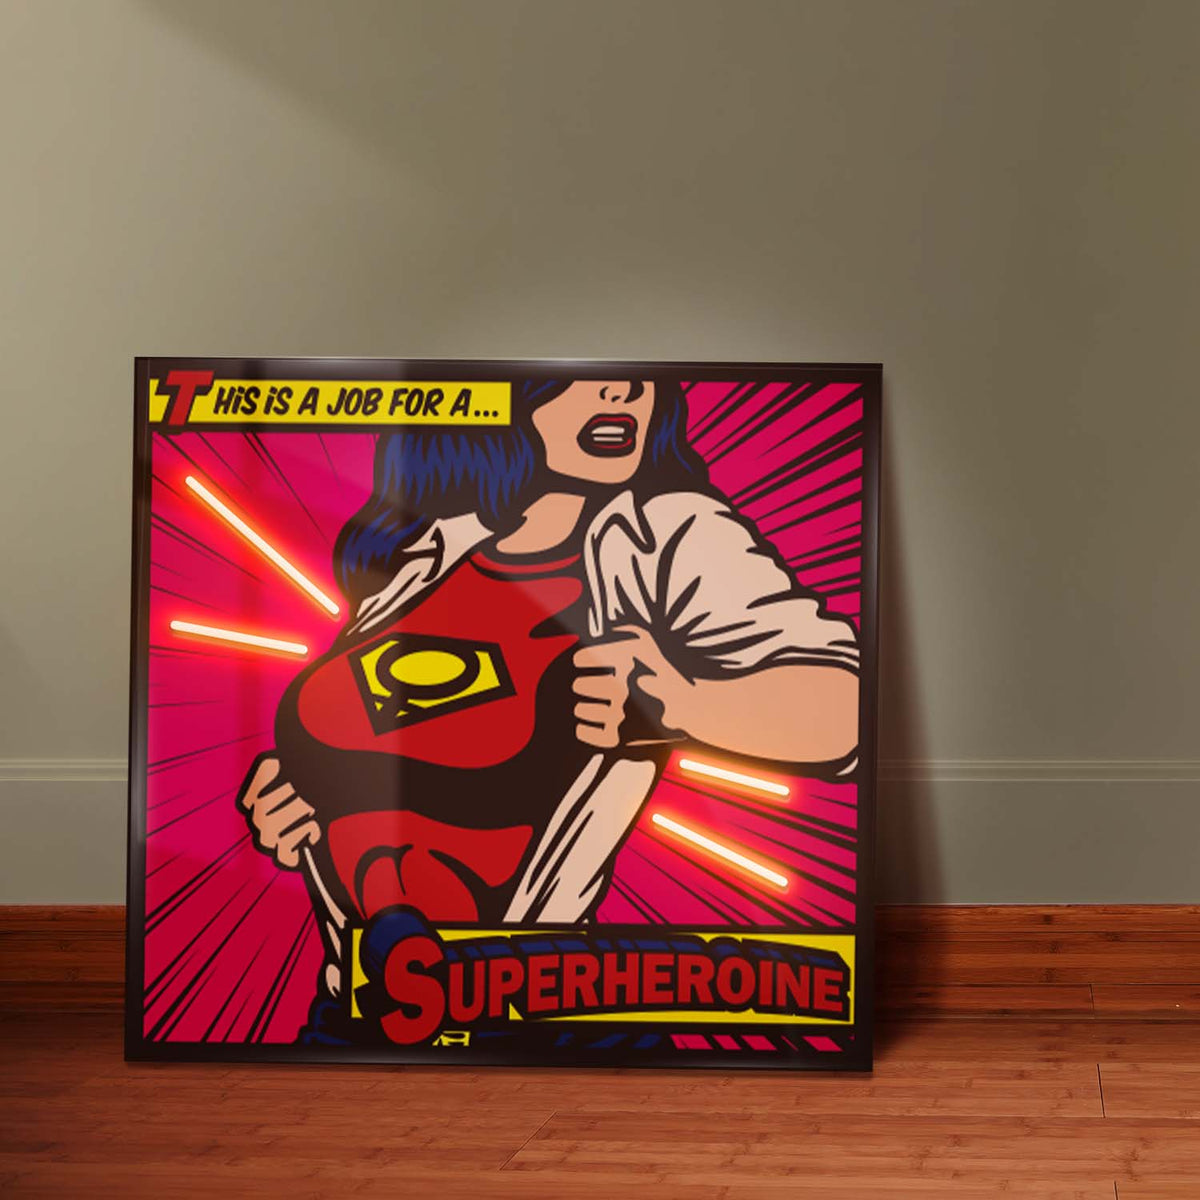 Superheroine neon sign